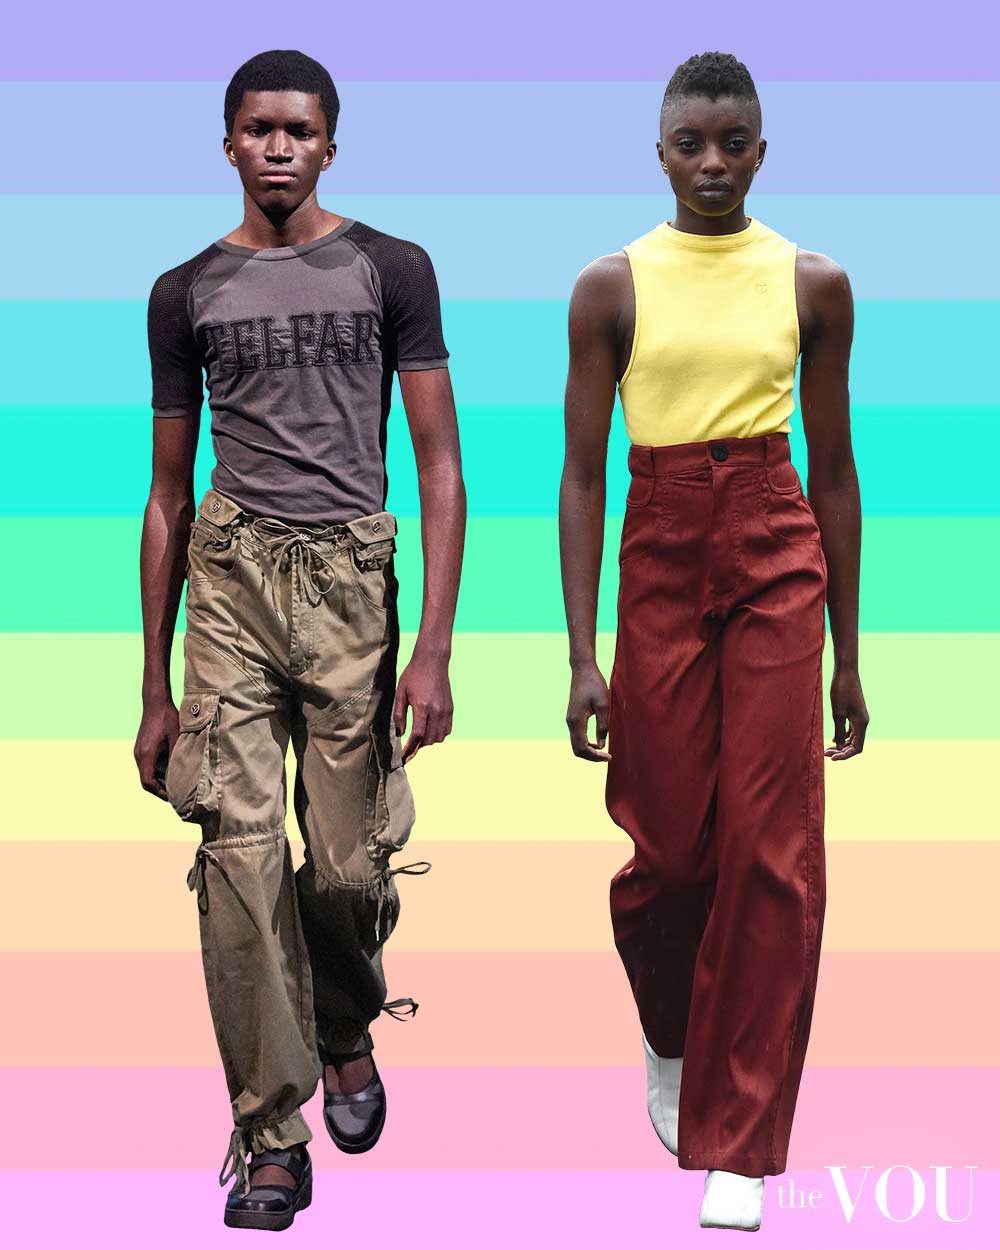 Telfar Gender Neutral Clothing